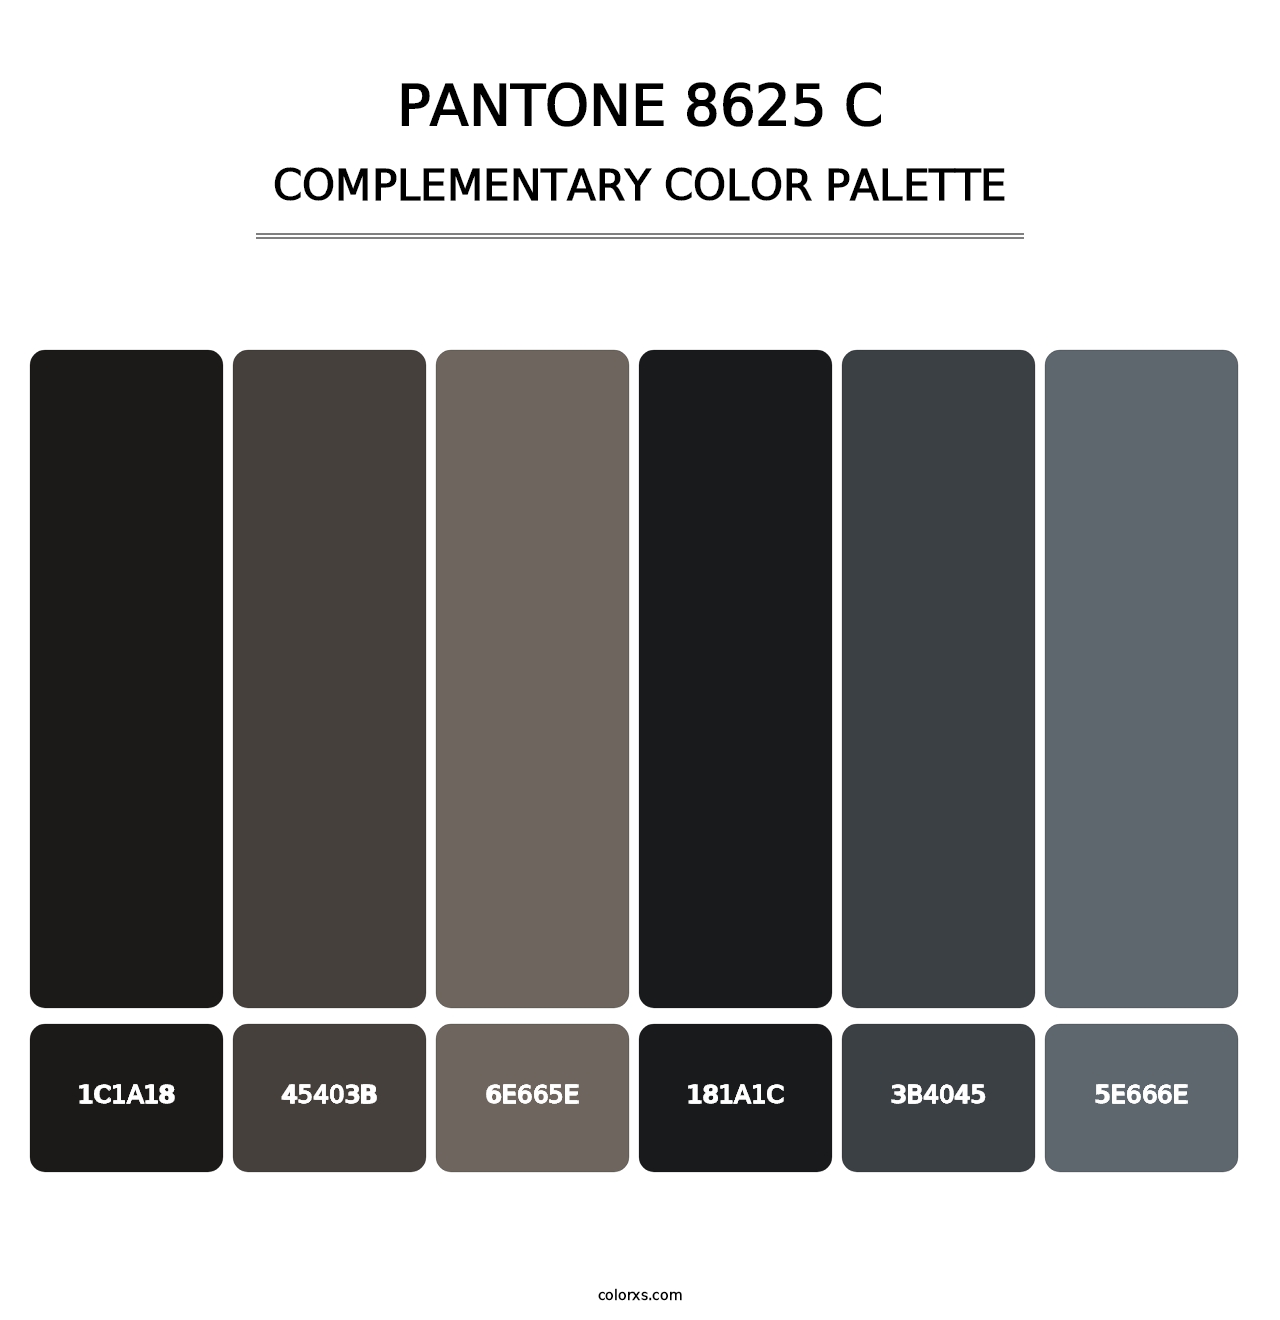 PANTONE 8625 C - Complementary Color Palette